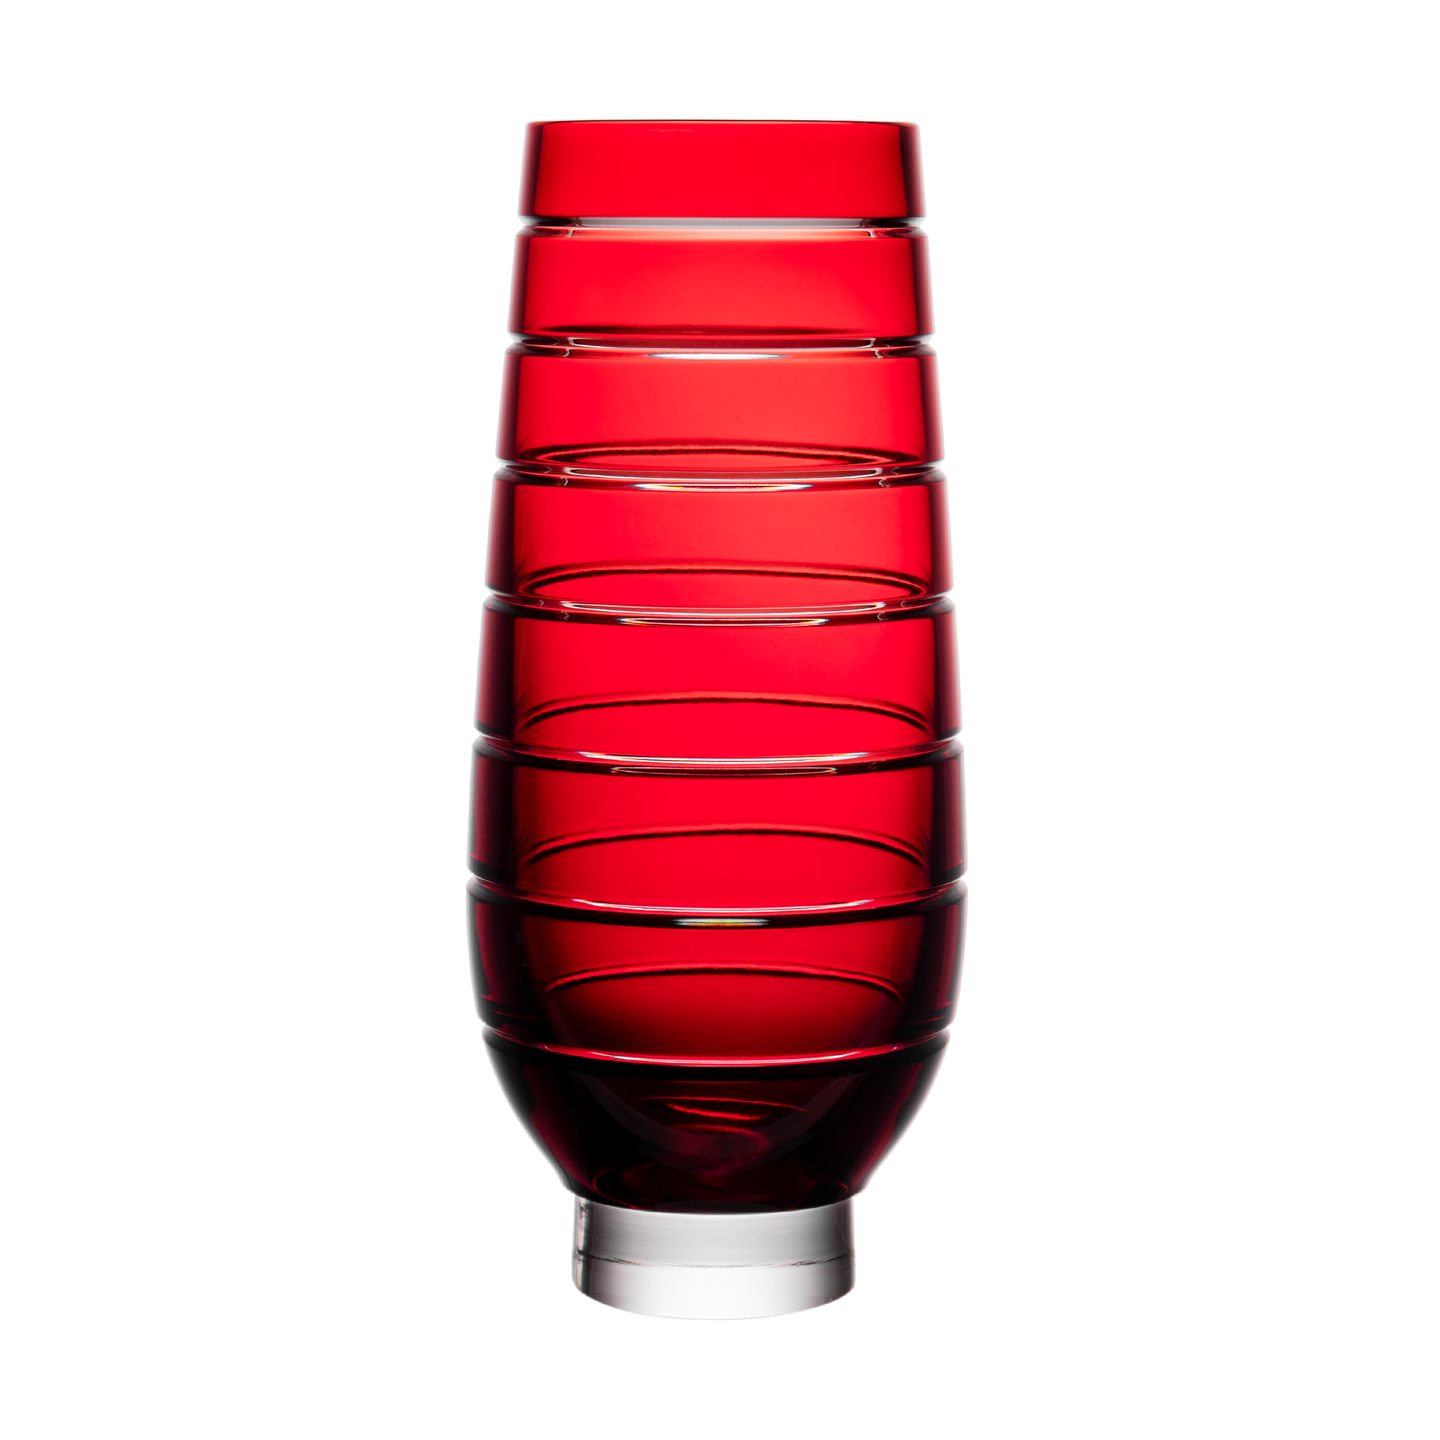 Ajka Crystal Renella Ruby Red Vase 10 in